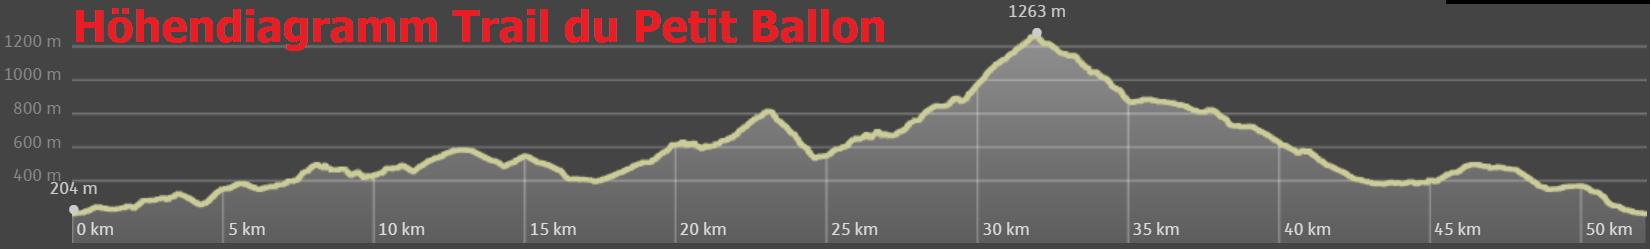 Höhendiagramm Trail du Petit Ballon 2017